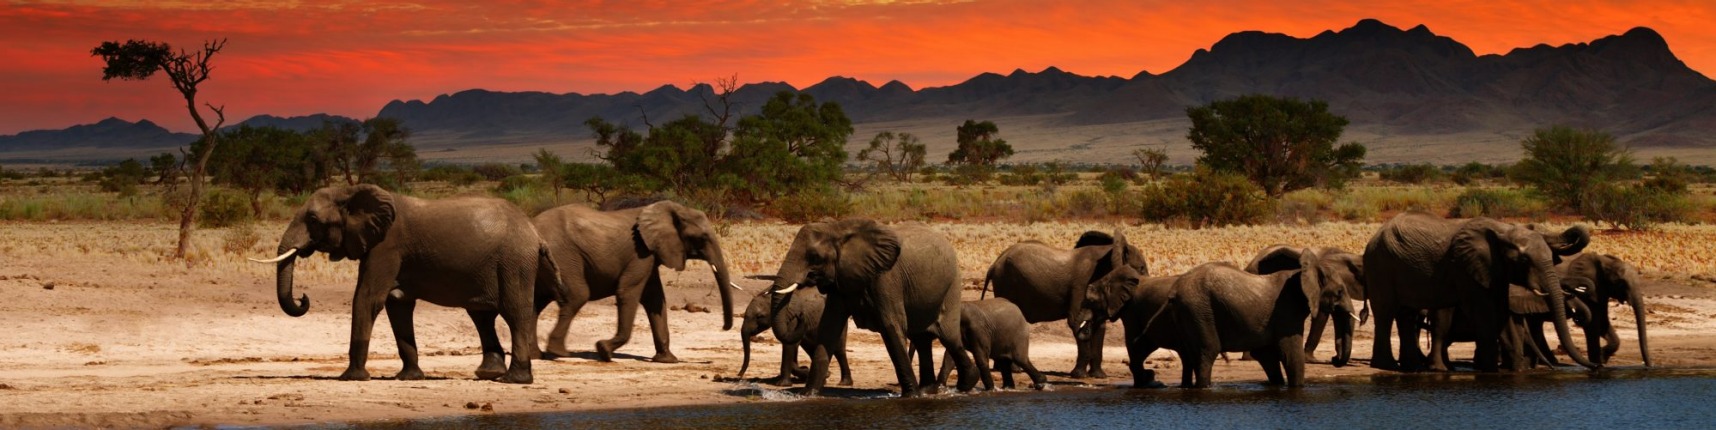 africa elephants